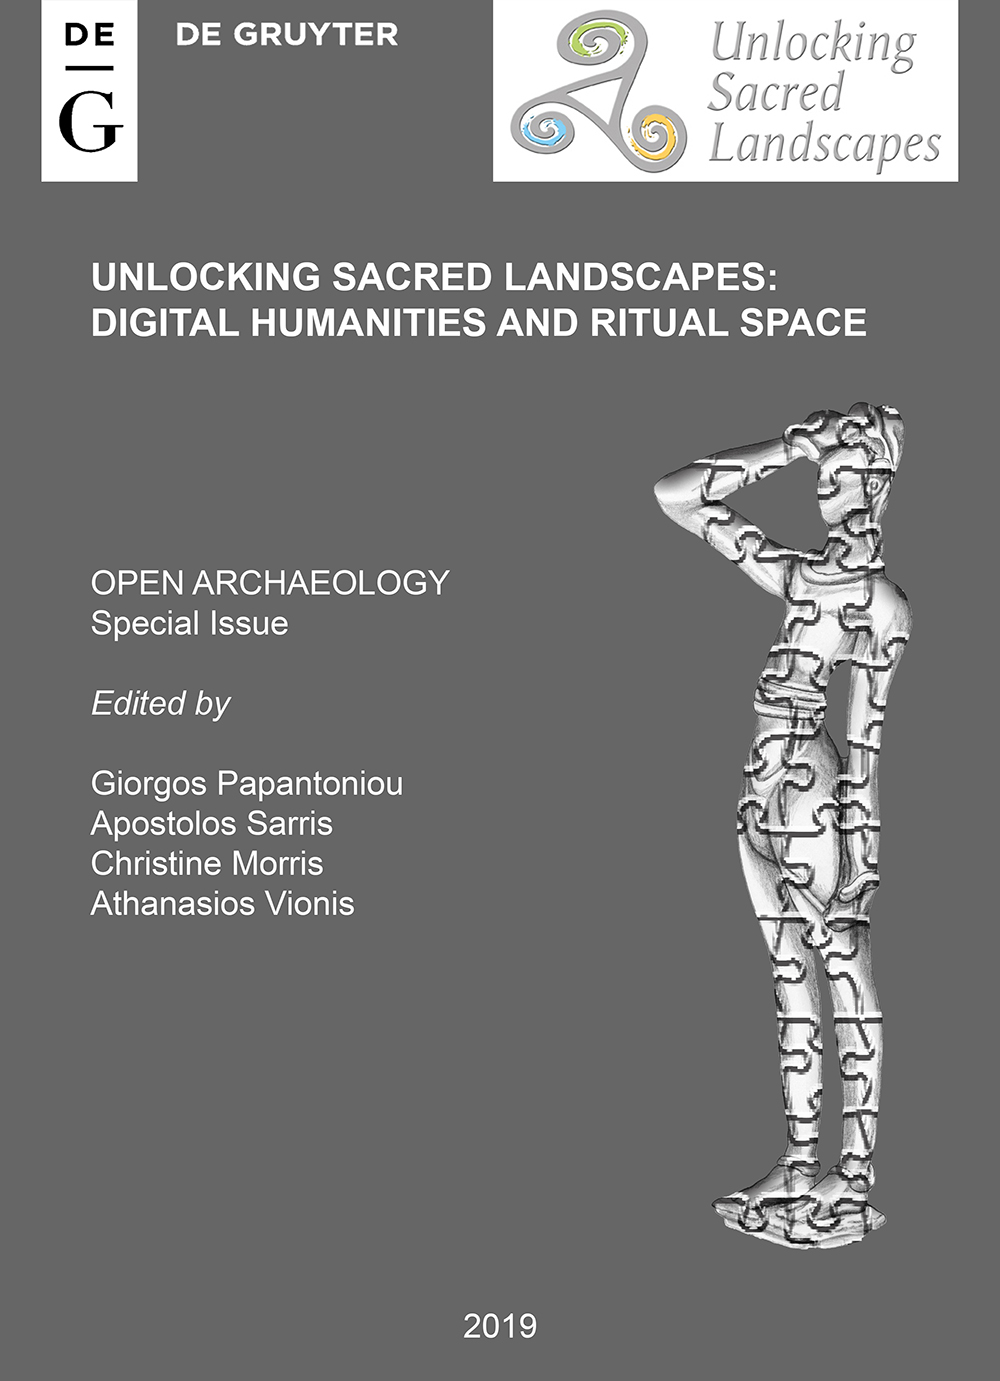 Open Archaeology